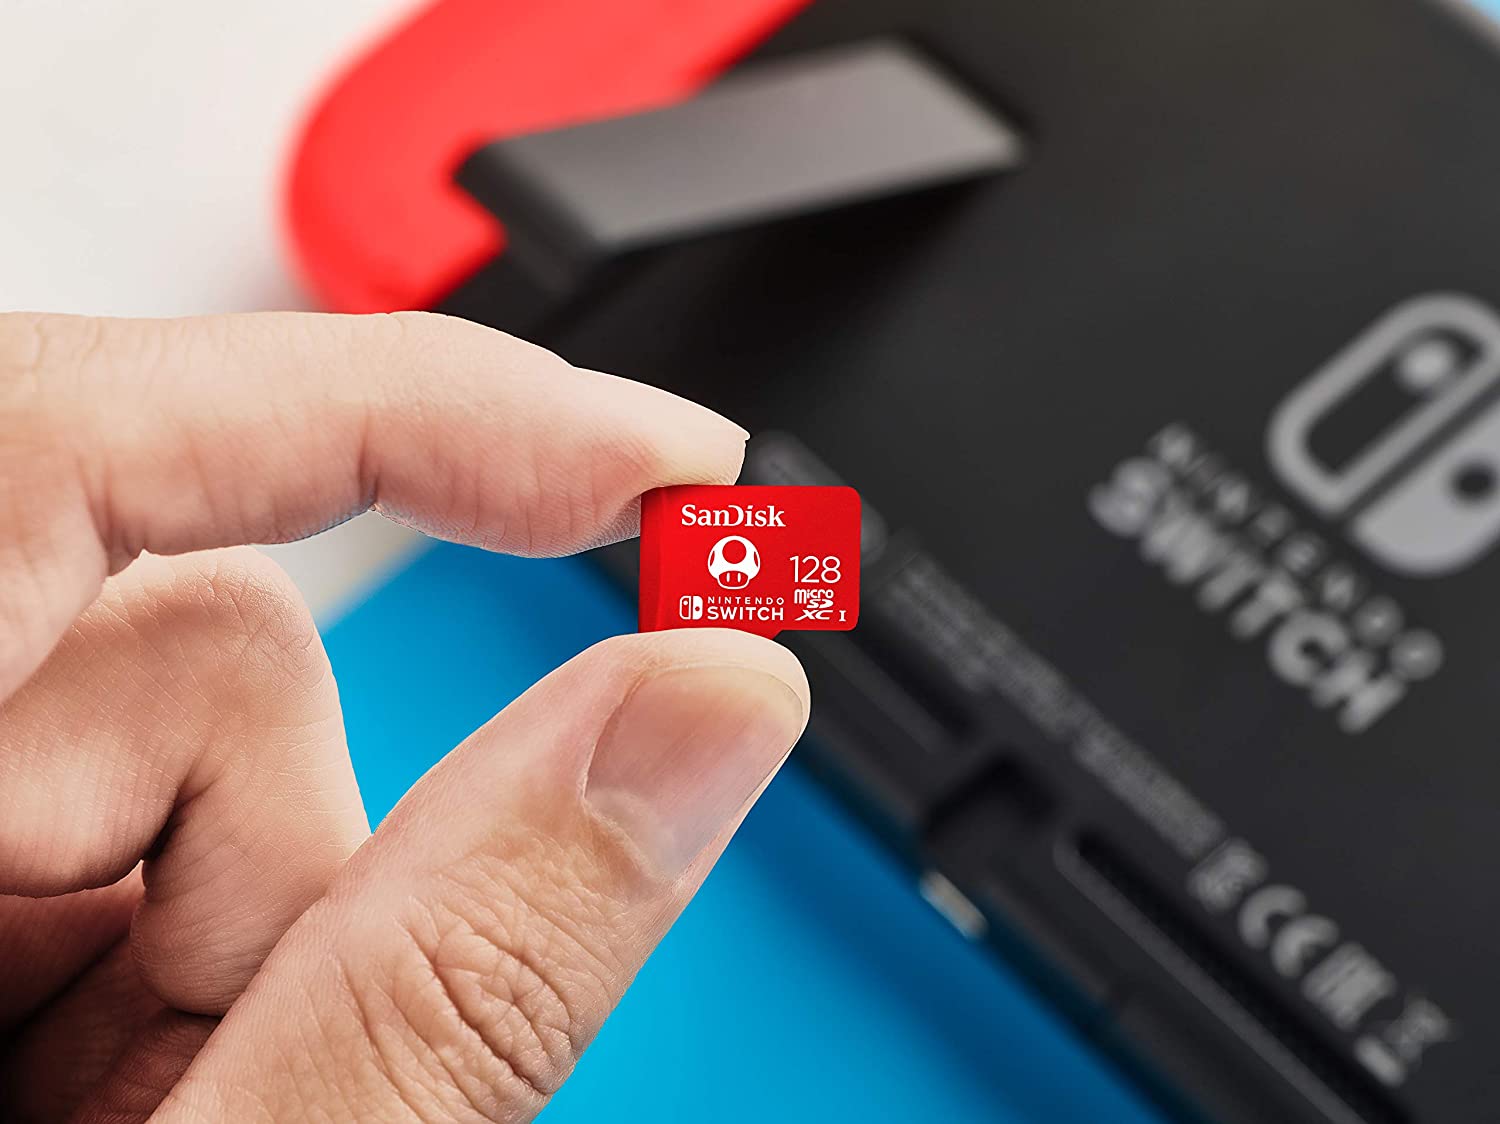 Amazon knocks half off a Nintendo Switch Online and microSD card bundle